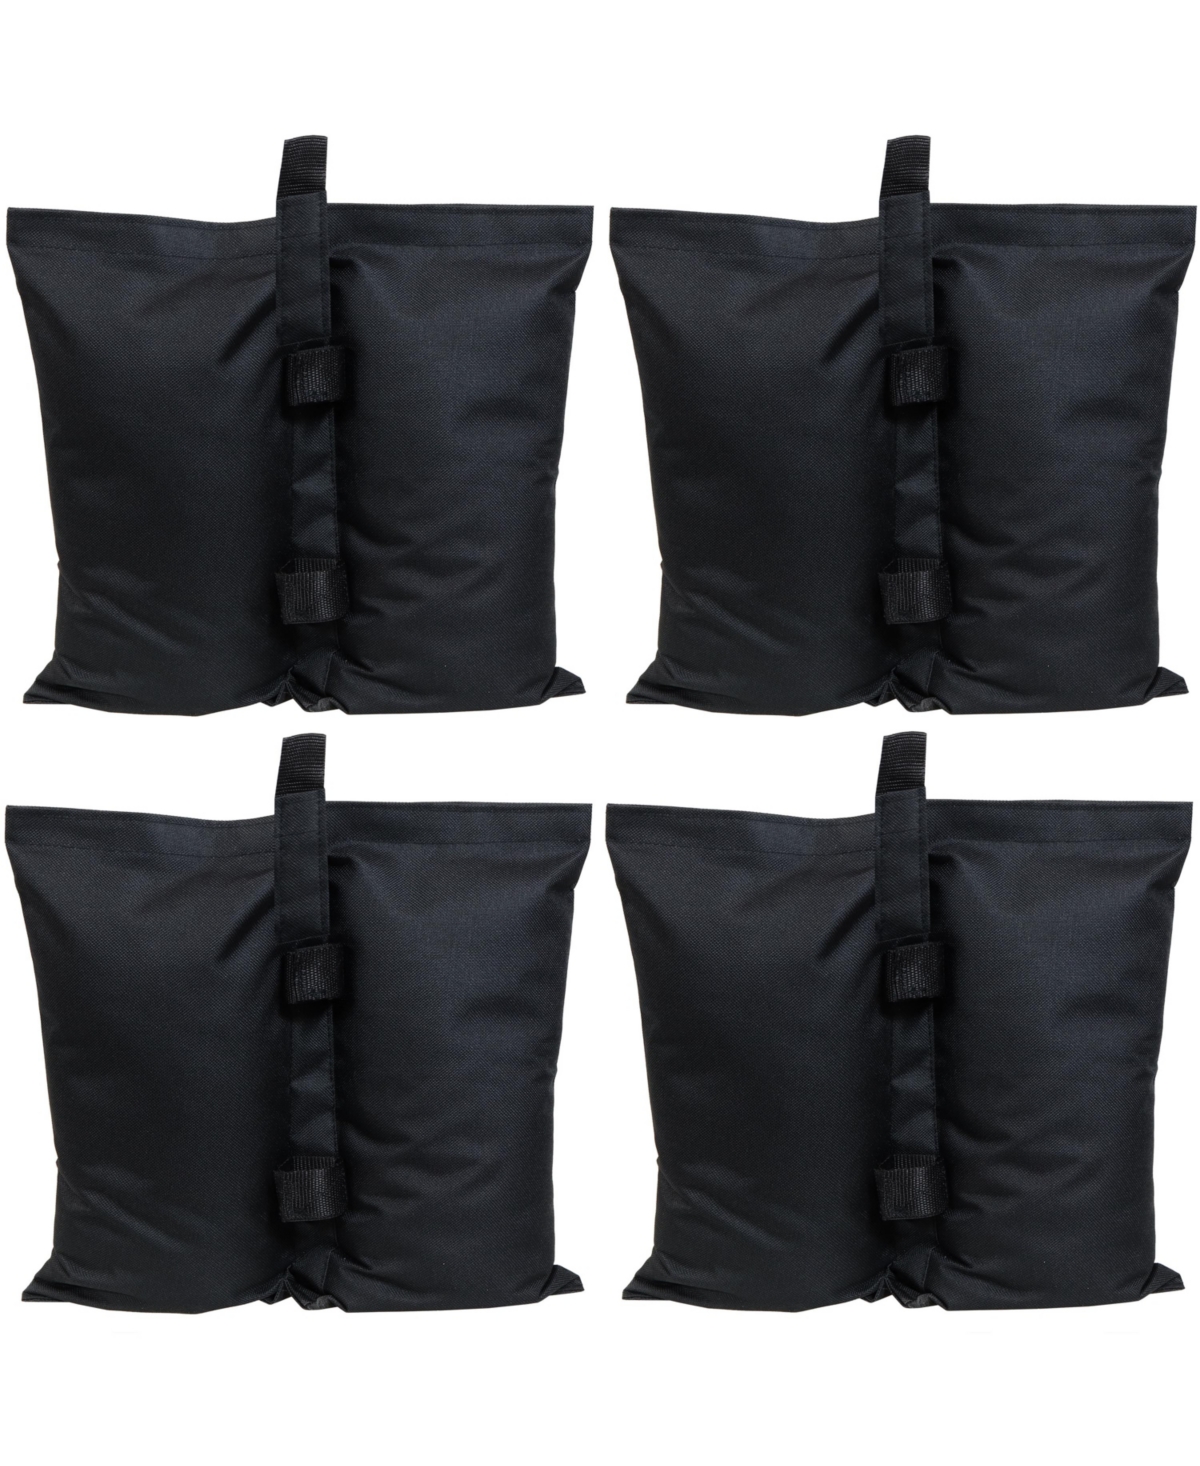 Polyester Sandbag Canopy Weights - Black - Set of 4 - Black